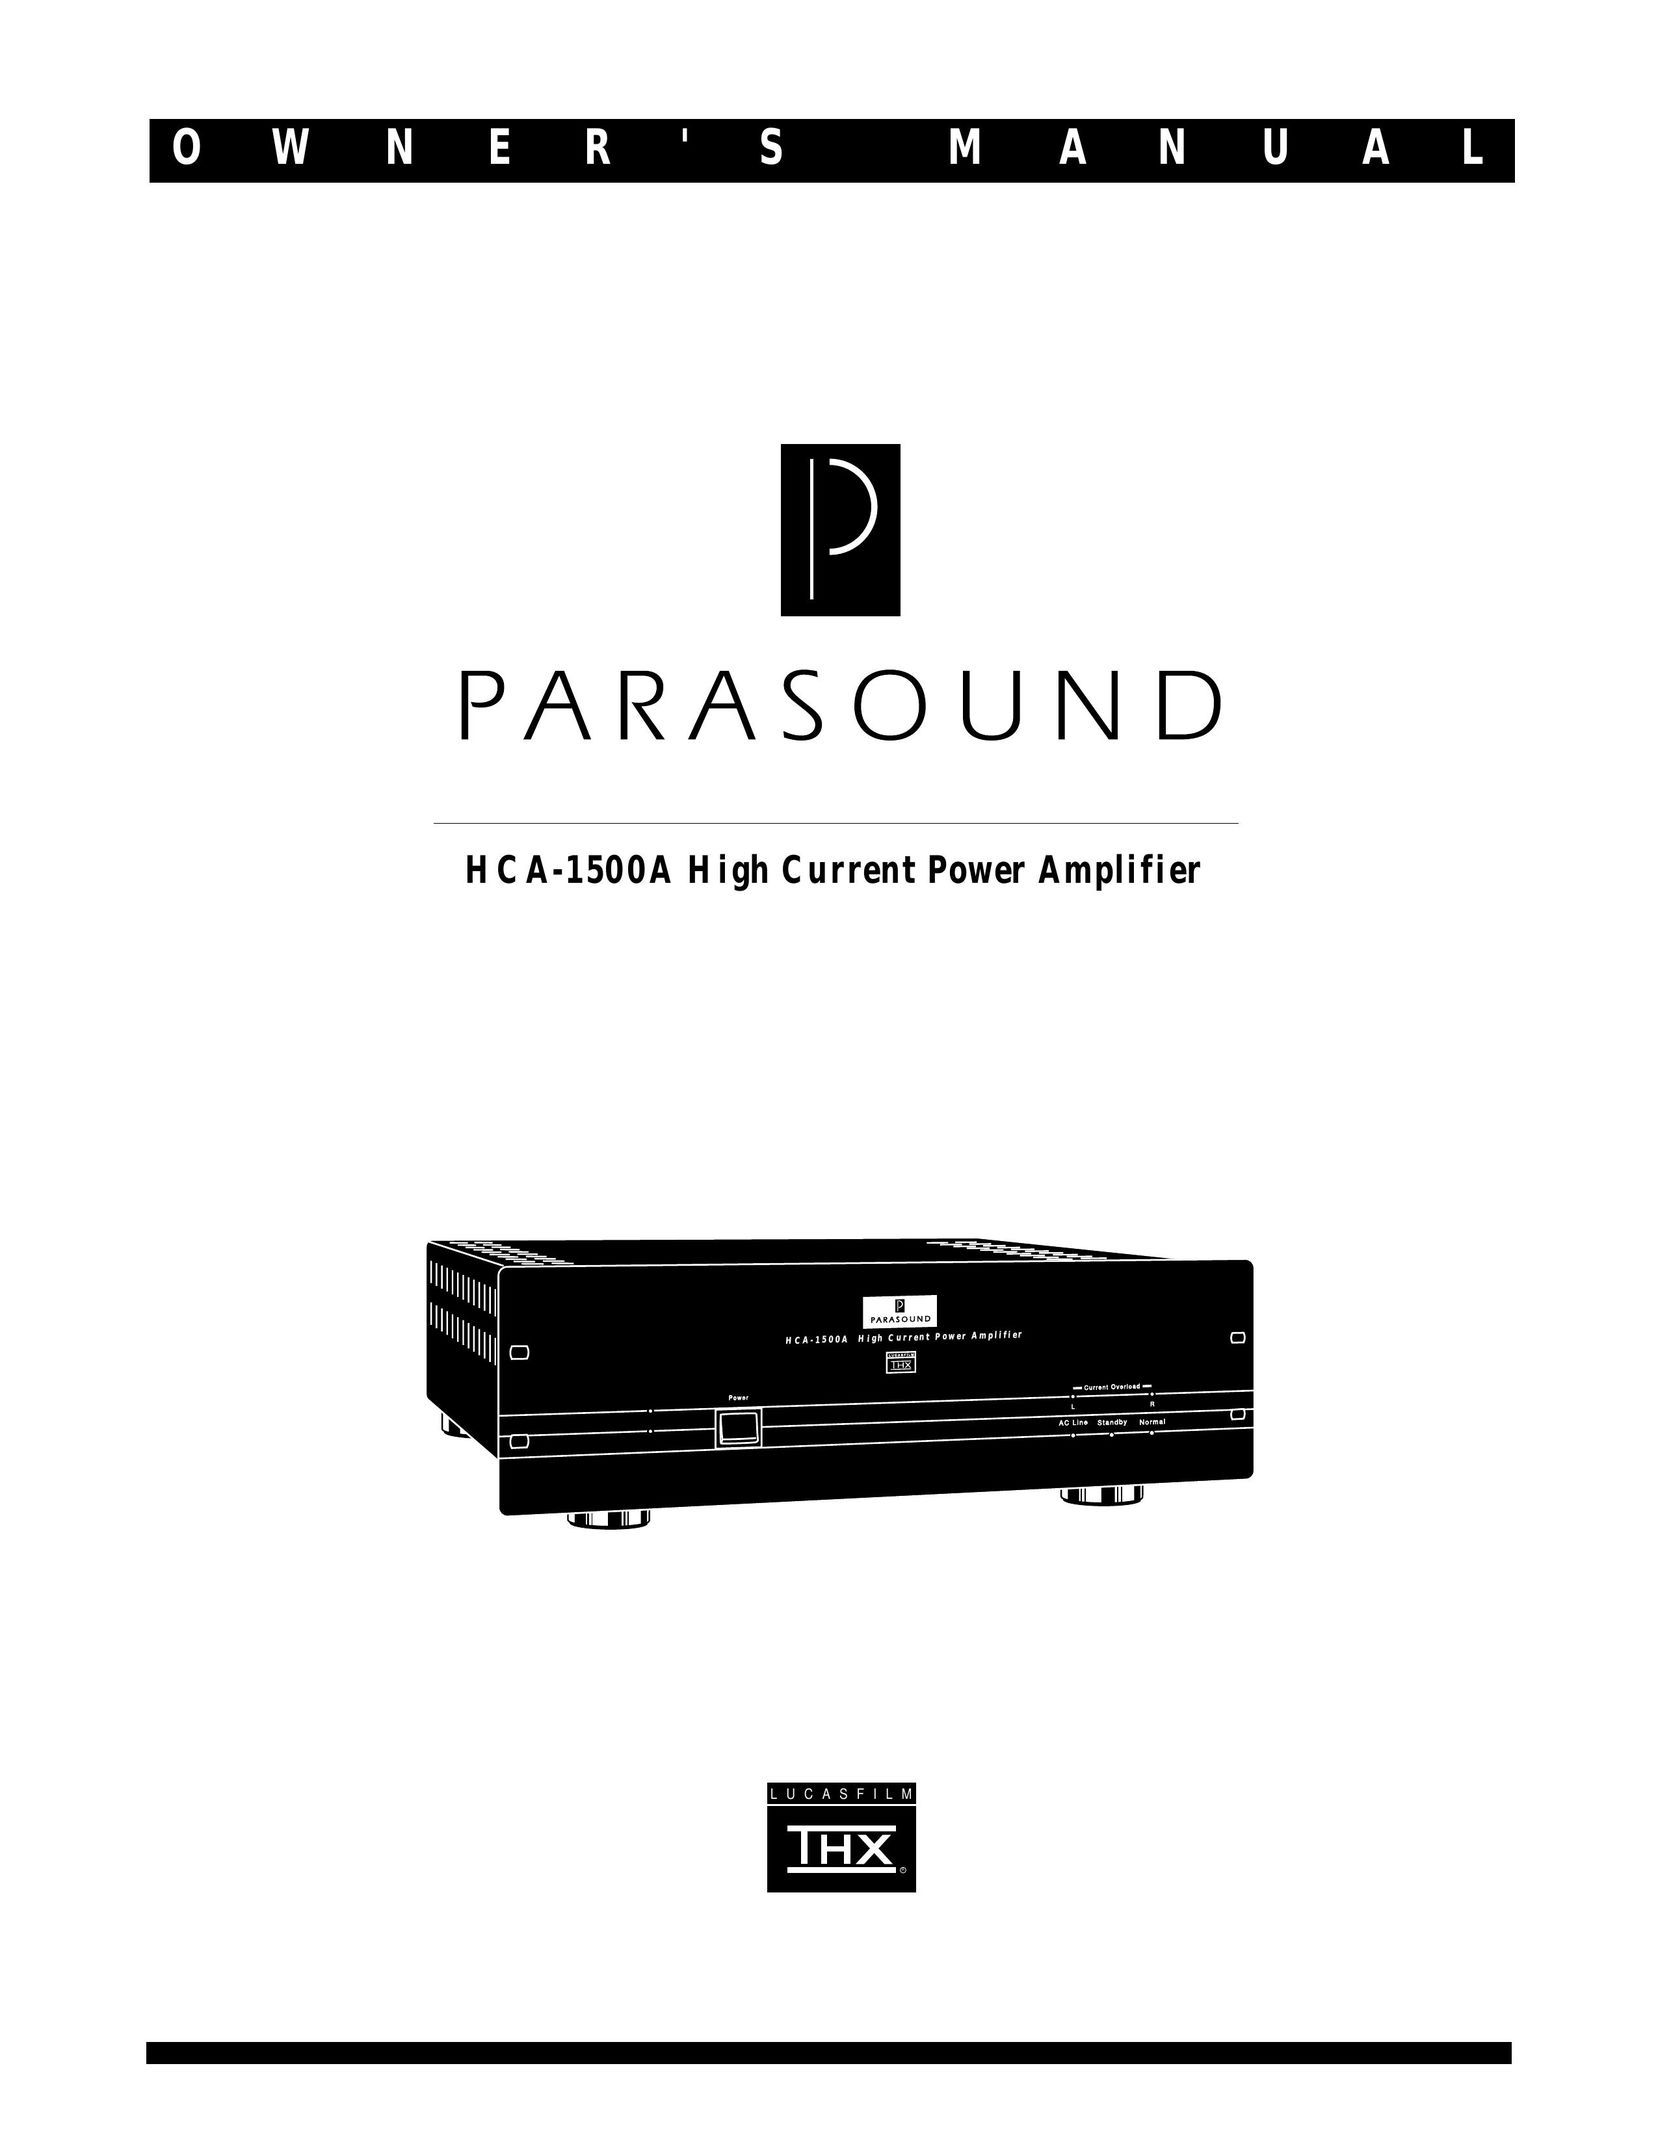 Parasound HCA-1500A Stereo Amplifier User Manual